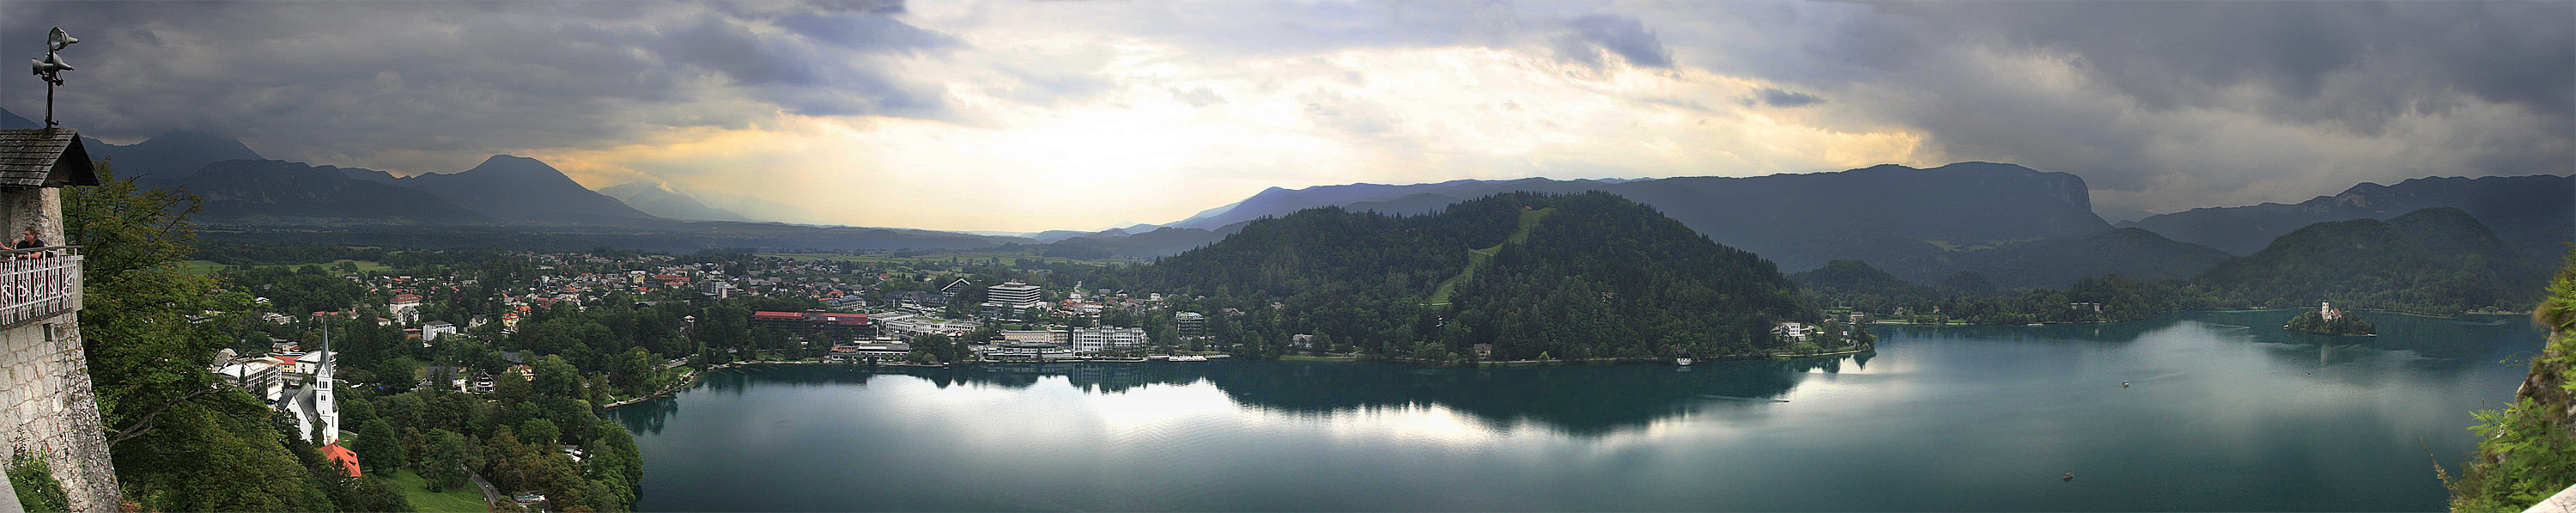 https://upload.wikimedia.org/wikipedia/commons/8/89/Panoramic_of_Bled.jpg